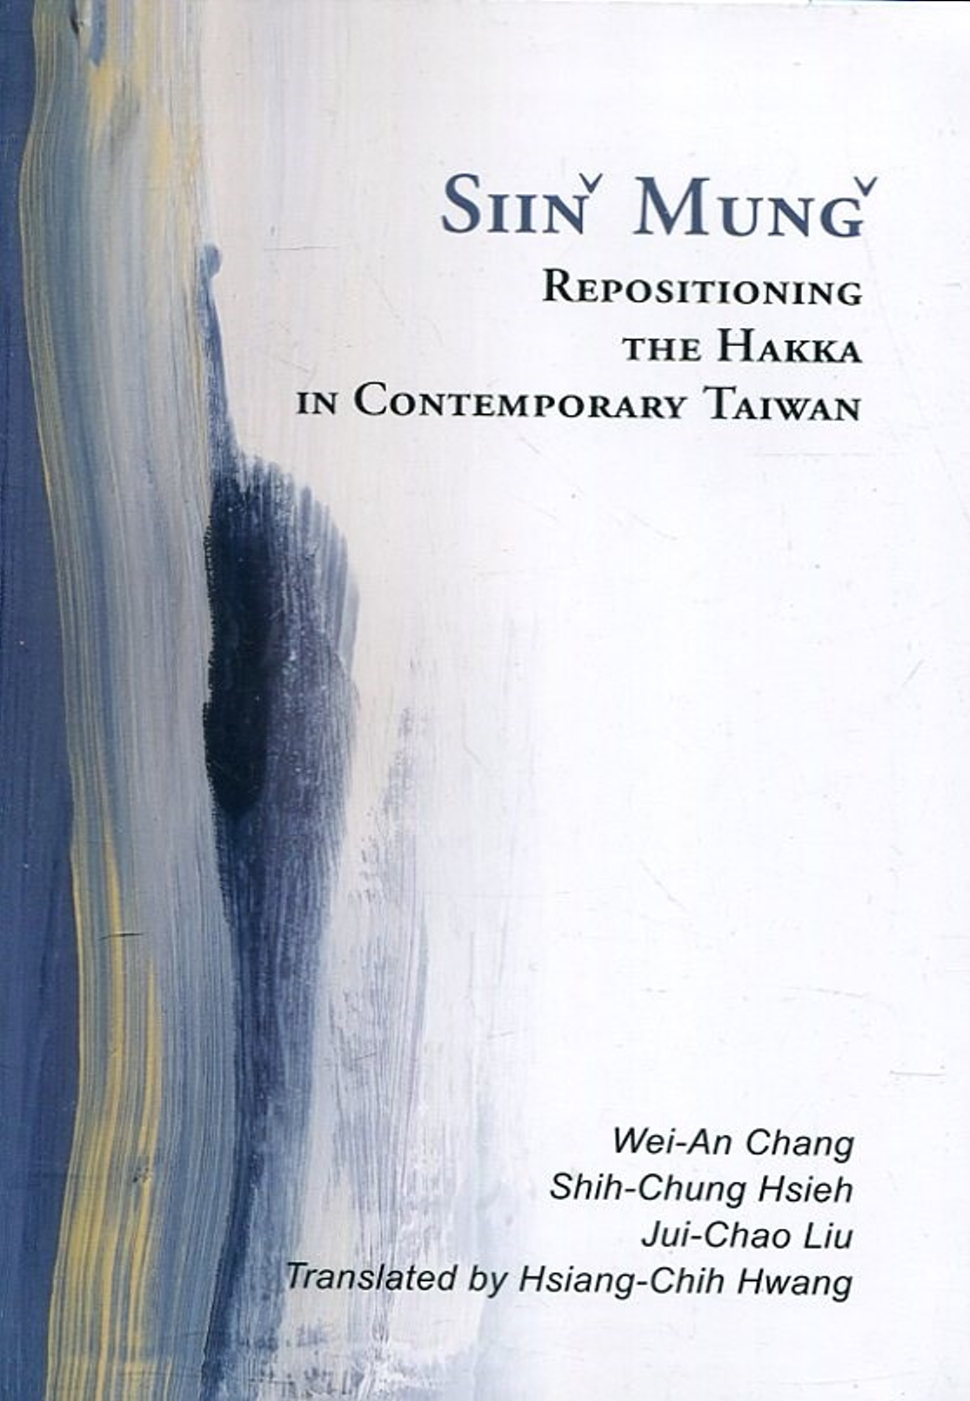 Siinˇ Mungˇ Repositioning the Hakka in Contemporary Taiwan